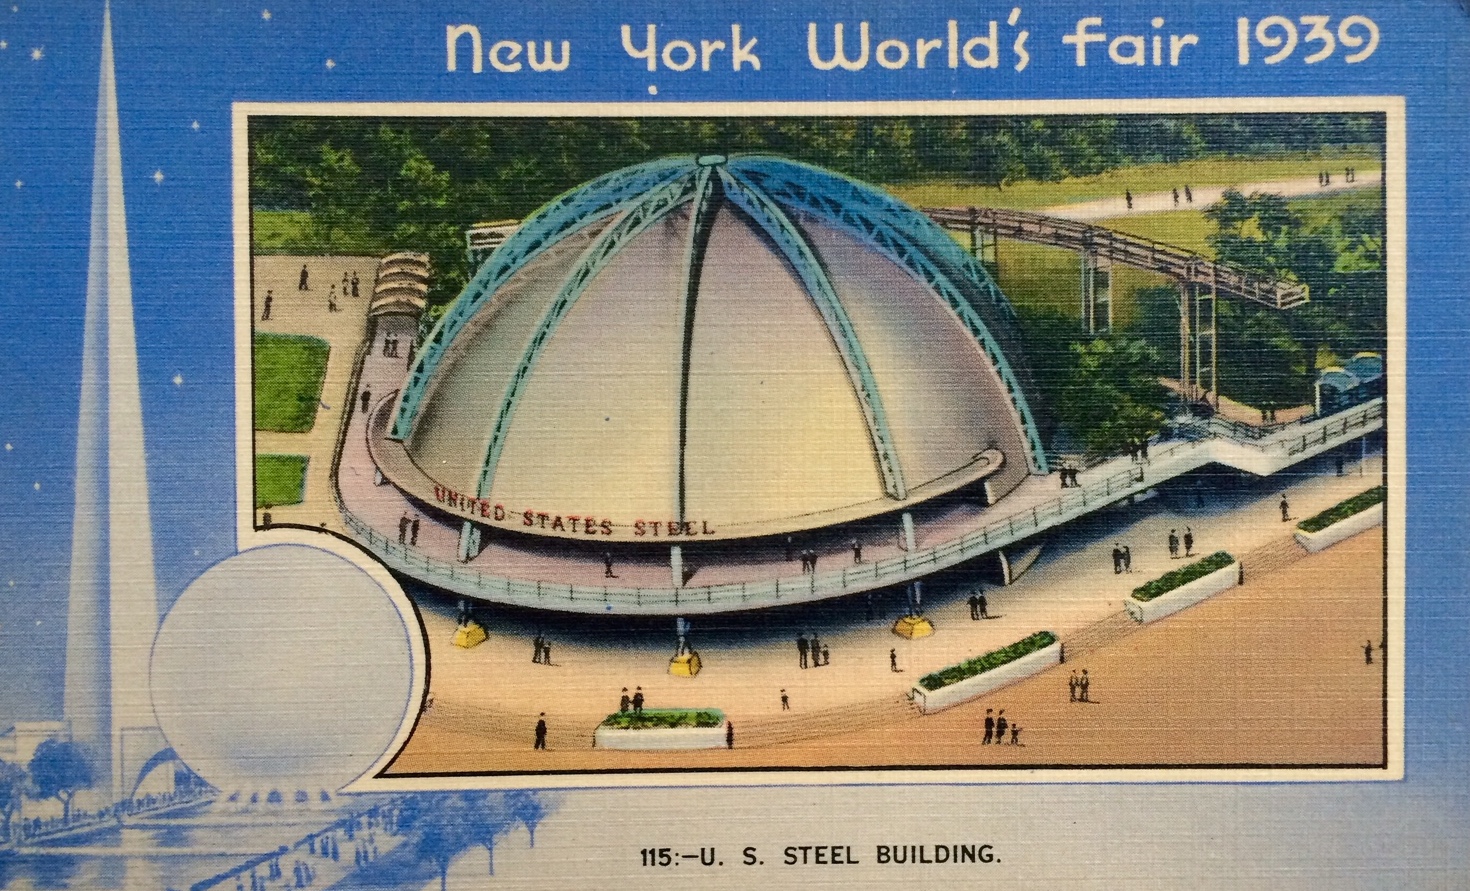 1939 World’s Fair was “World of Tomorrow”